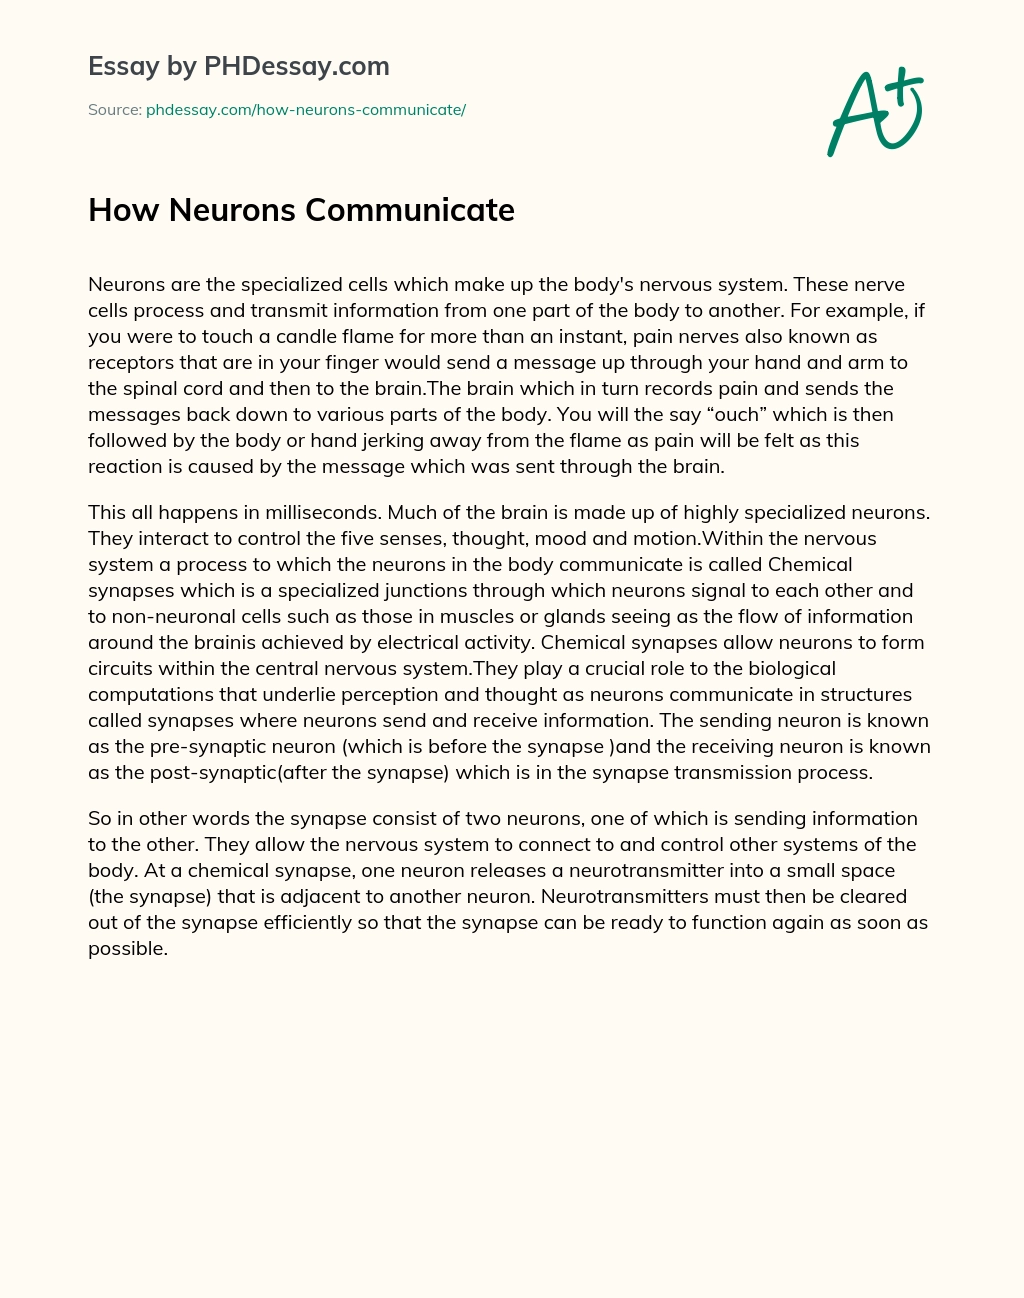 How Neurons Communicate essay